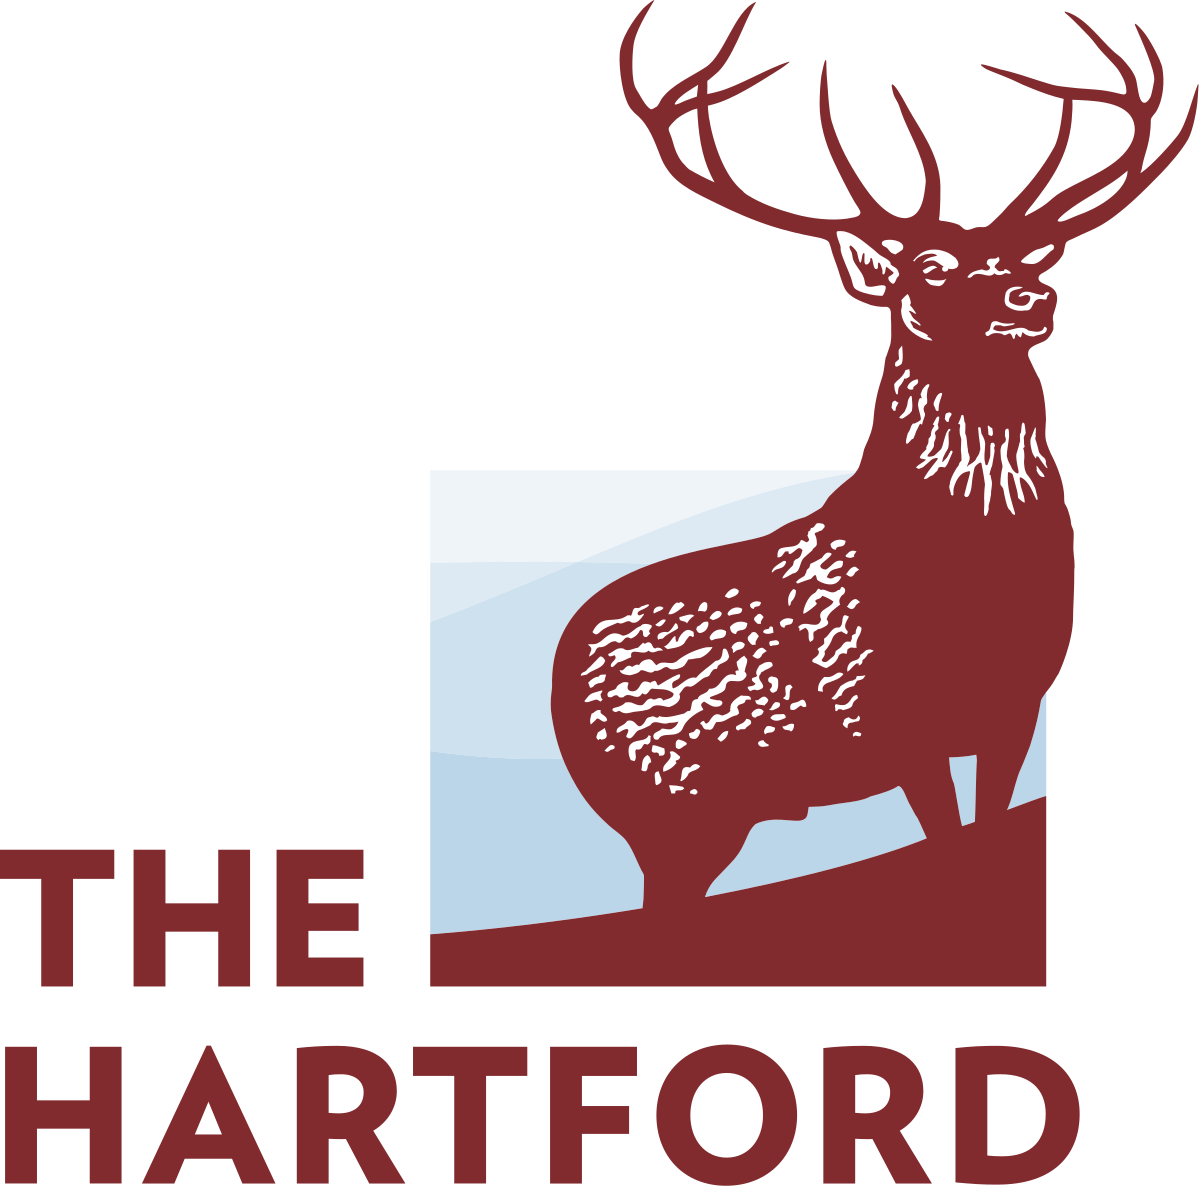 The Hartford Brand Logo